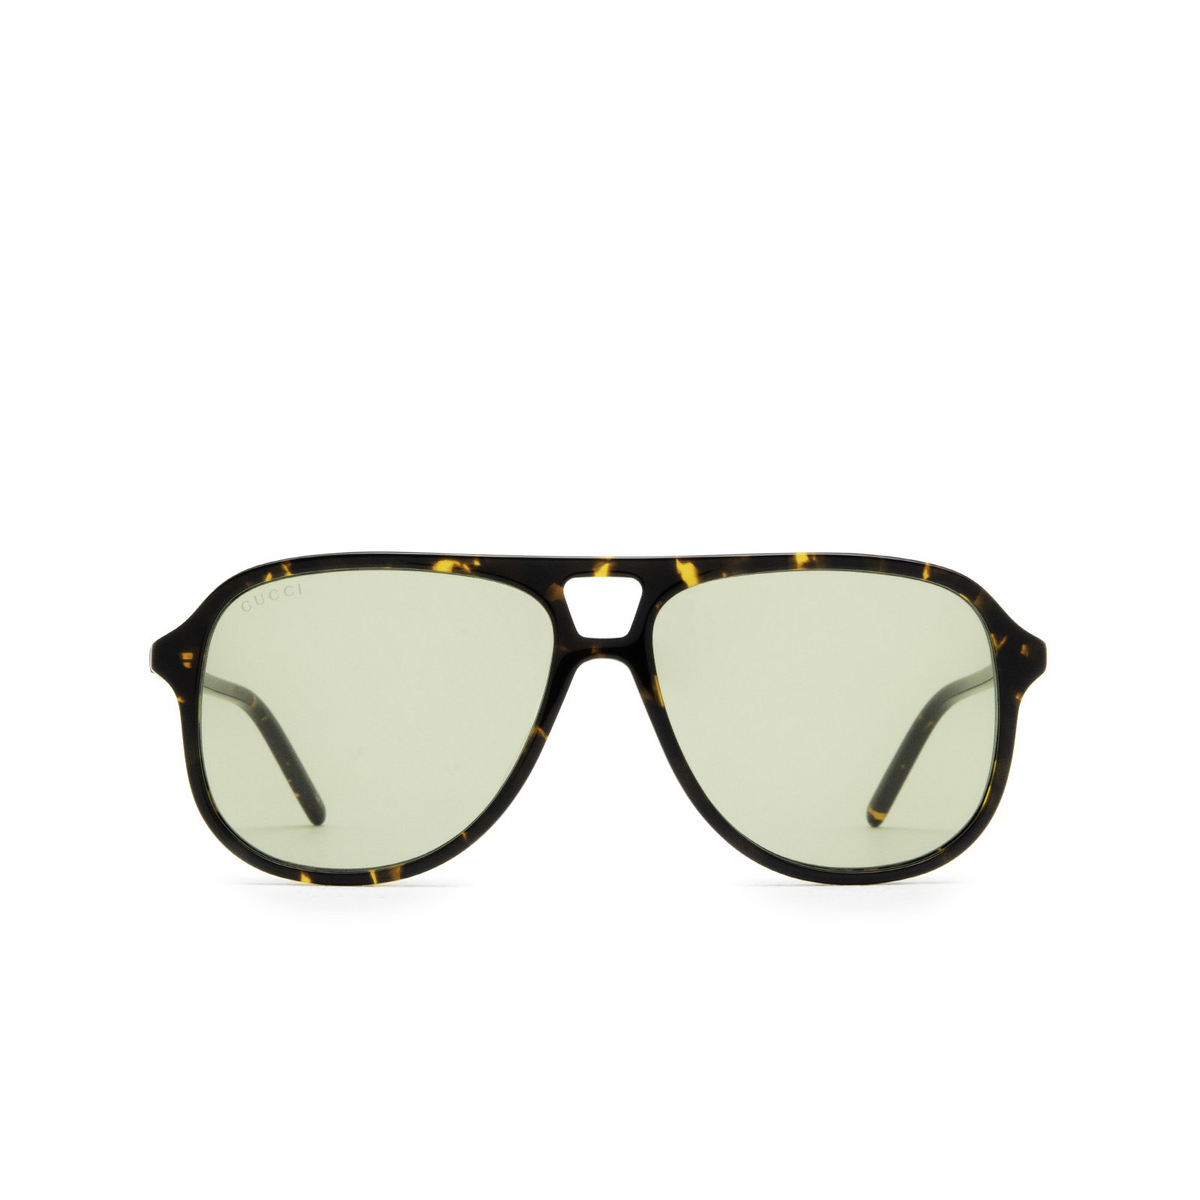 Gucci® Aviator Sunglasses: GG1156S color Havana 004 - front view.